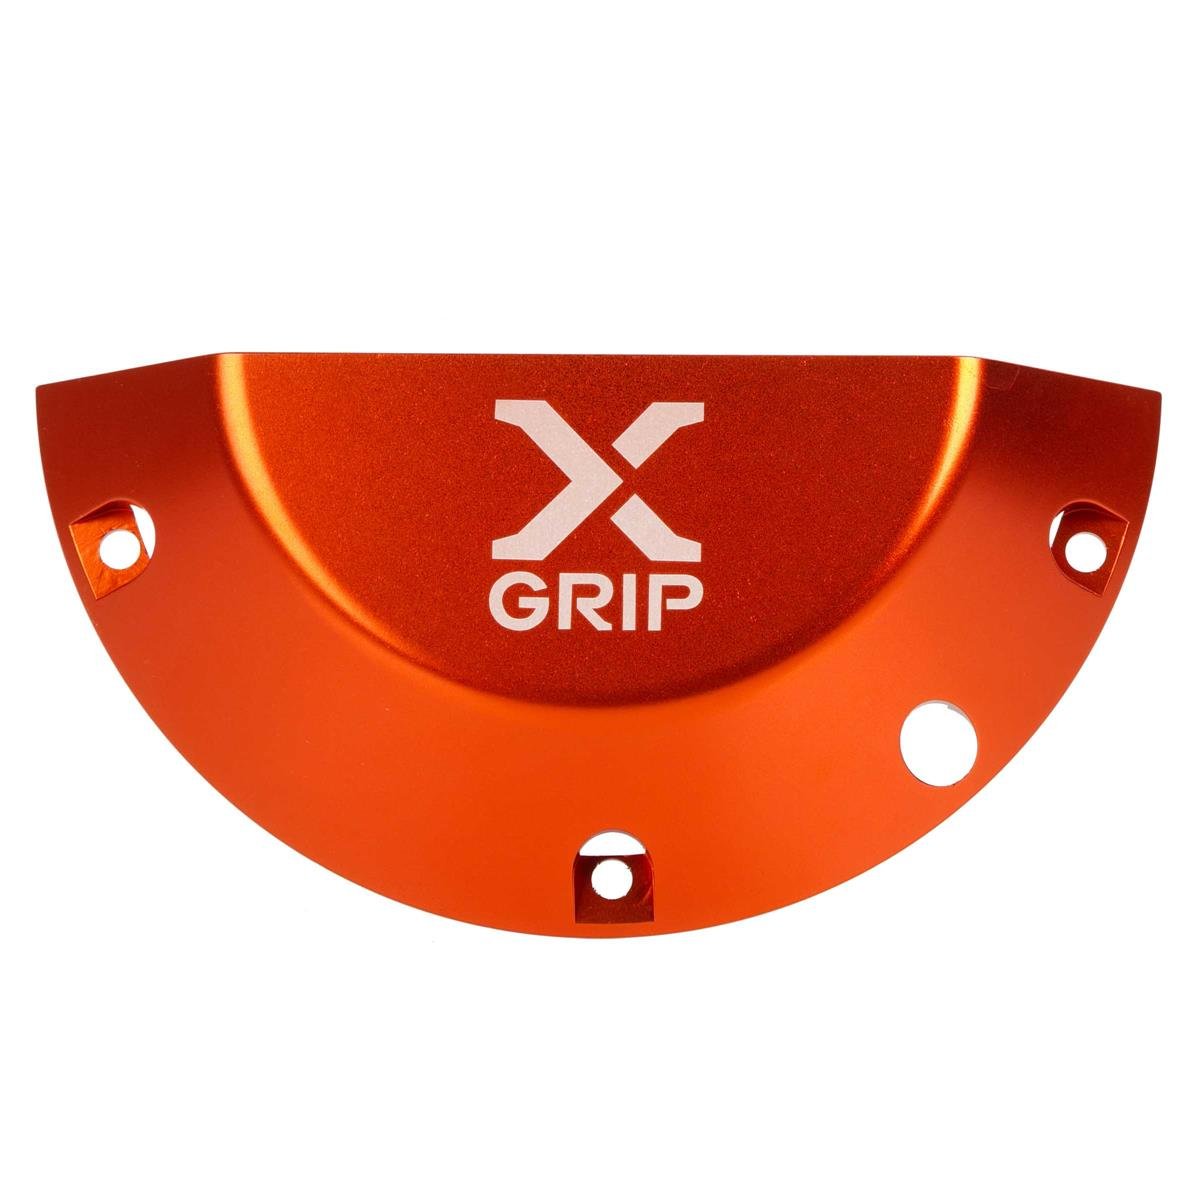 X-Grip Protezione Frizione Clutch Cover Guard KTM EXC 250/300 TPI 17-, Arancione